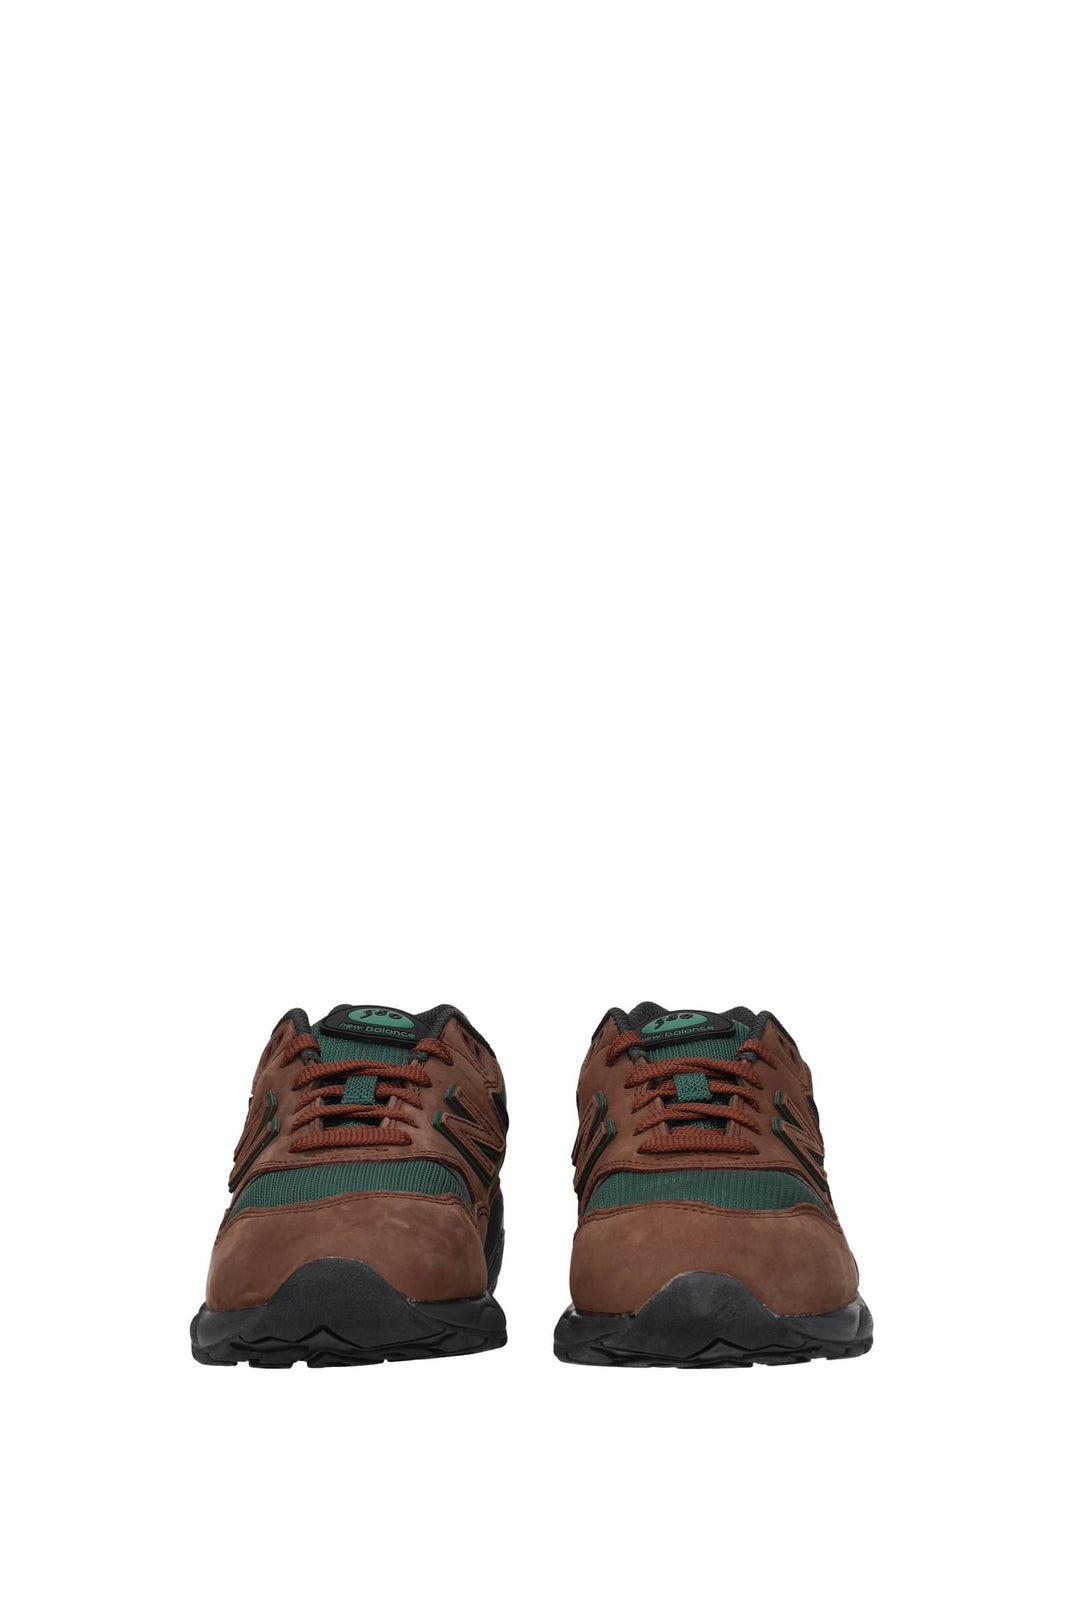 Sneakers 580 Camoscio Marrone Verde - New Balance - Uomo